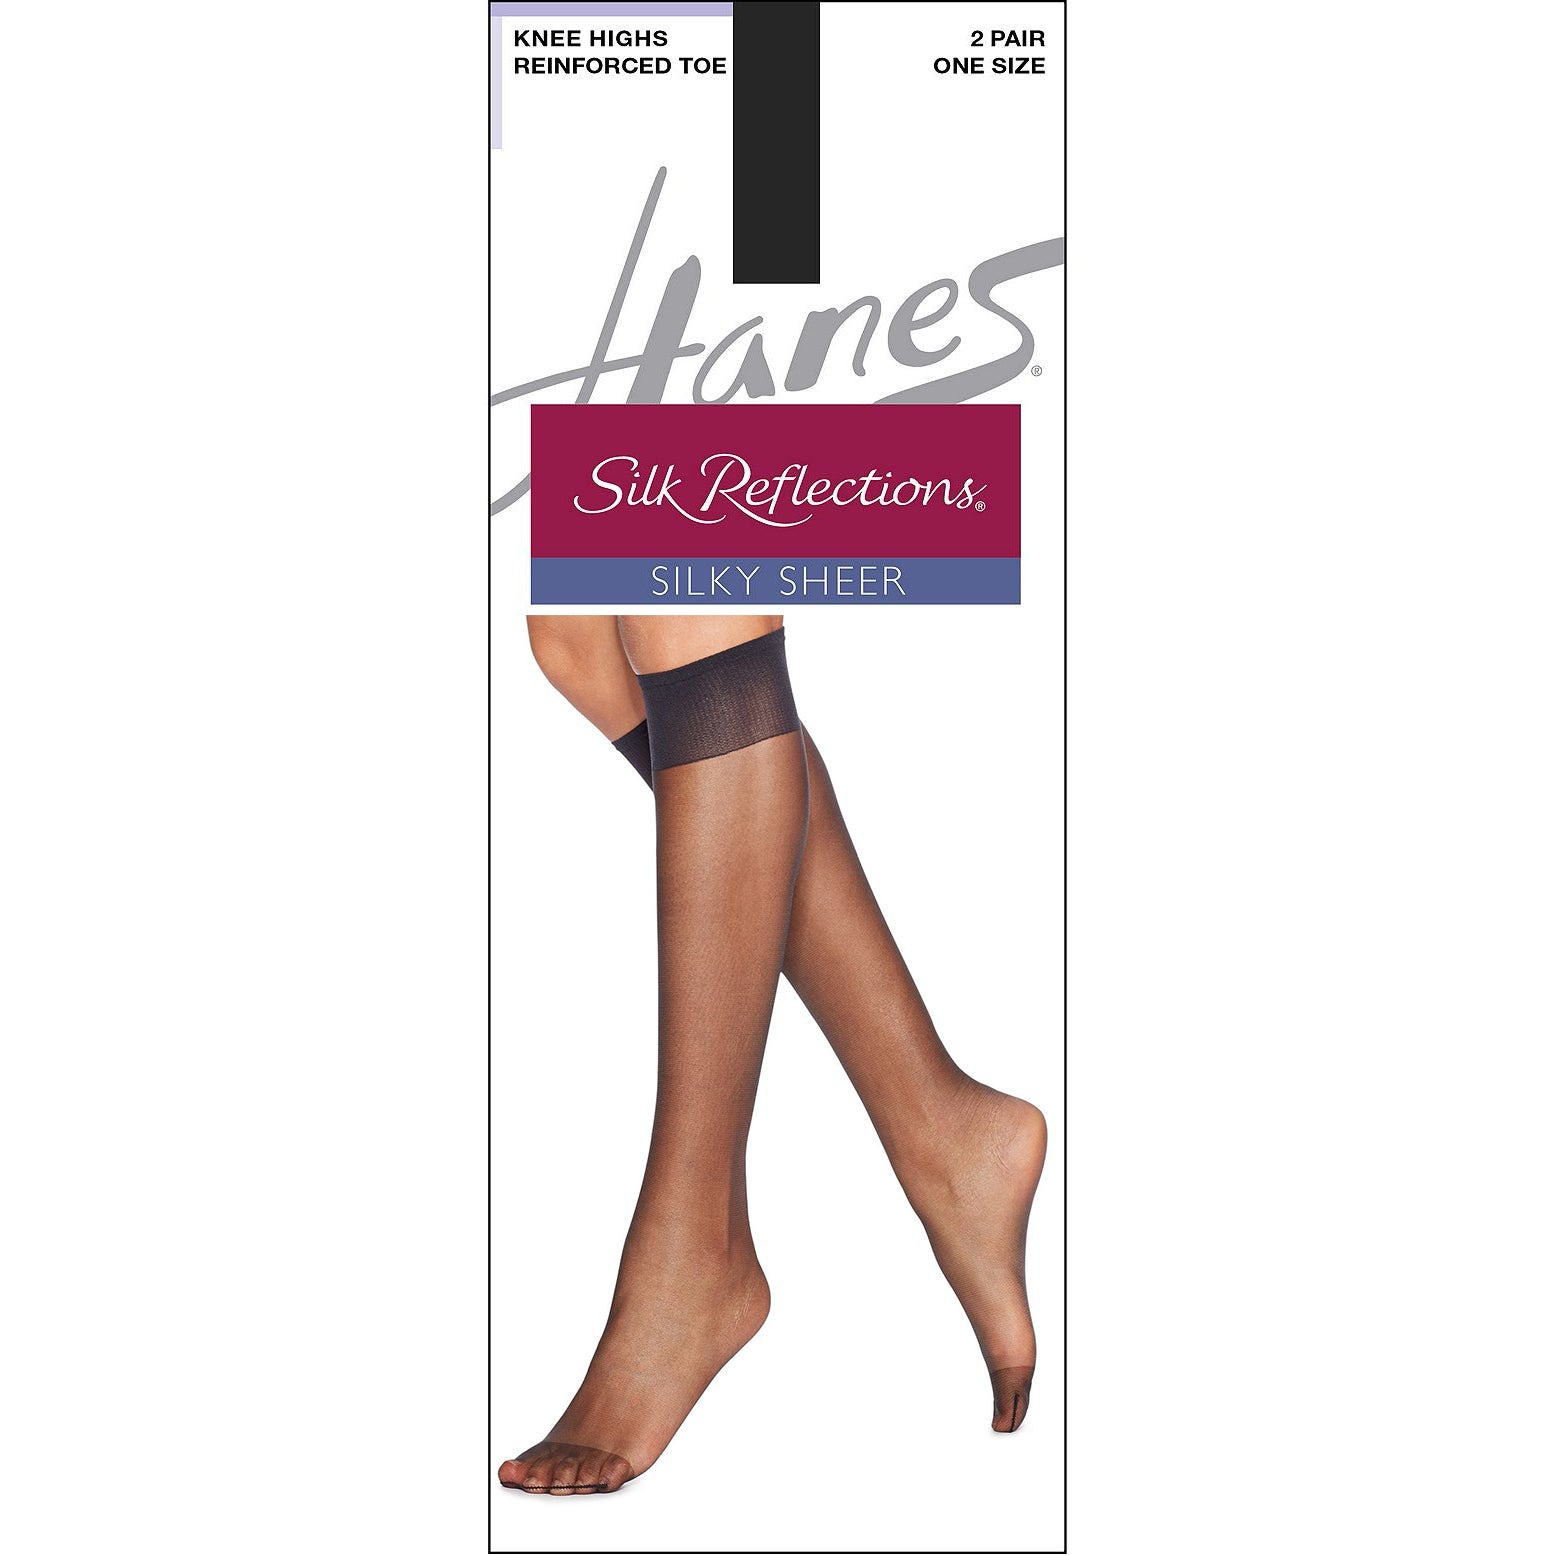 Hanes Silk Reflections Knee Highs Reinforced Toe 00775 2-pair pack – Good's  Store Online